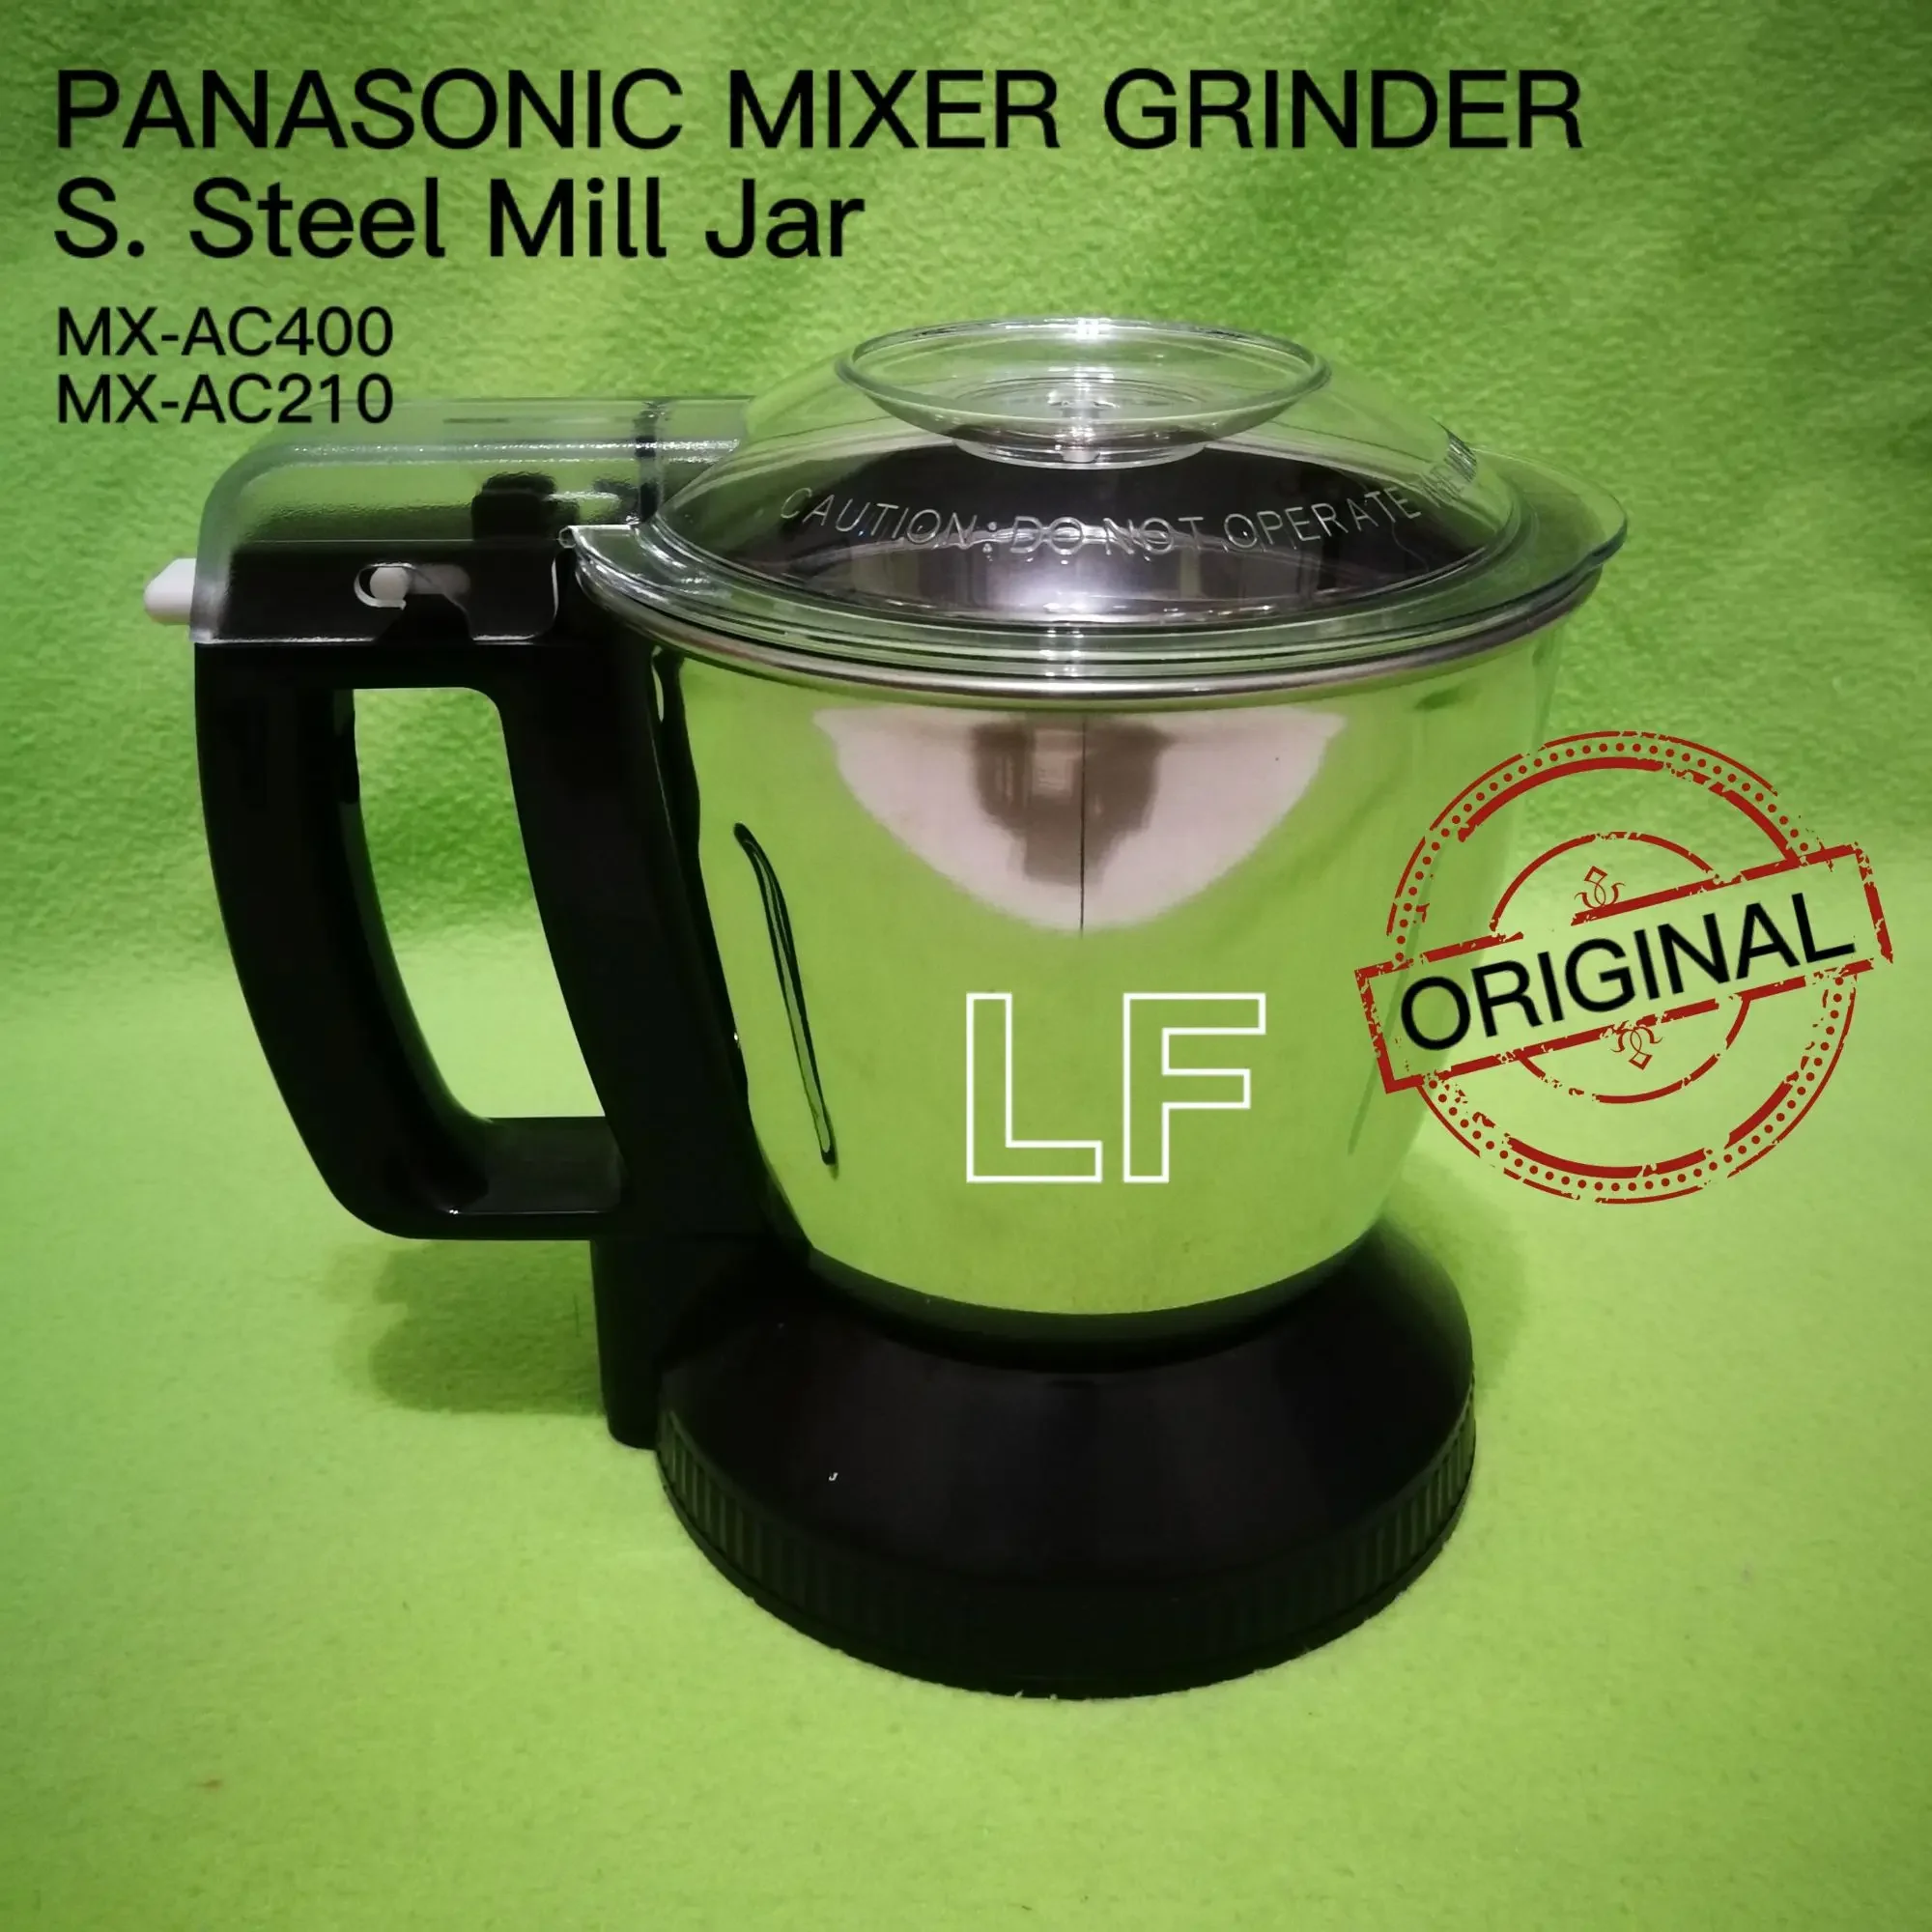 [SPARE PART]PANASONIC 4 JARS MIXER GRINDER MX-AC400 / MX-AC210S ORIGINAL SPARE PART